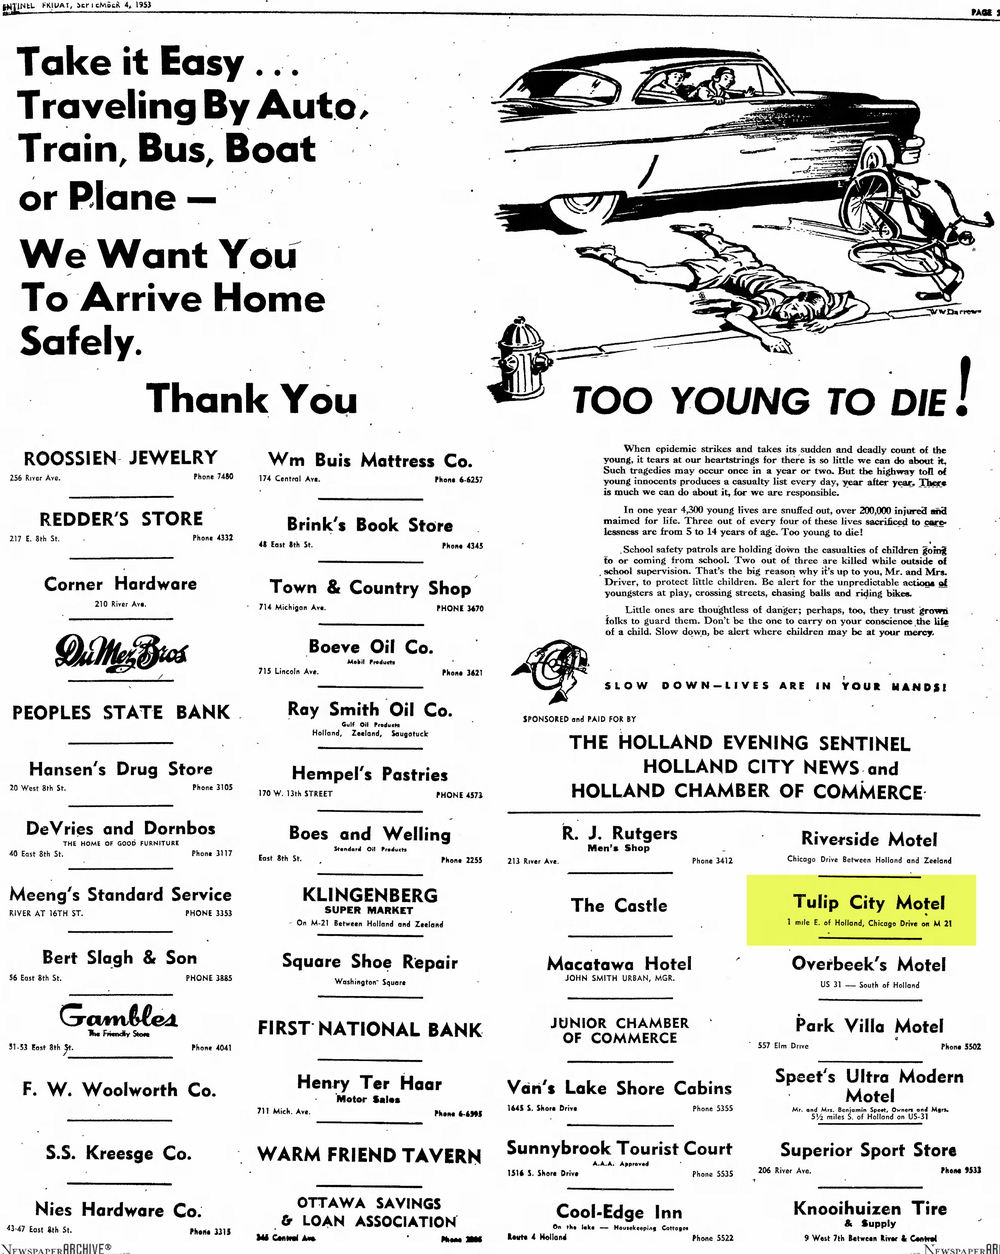 Tulip City Motel - Sept 1953 Full Page Ad Holland Evening Sentinel